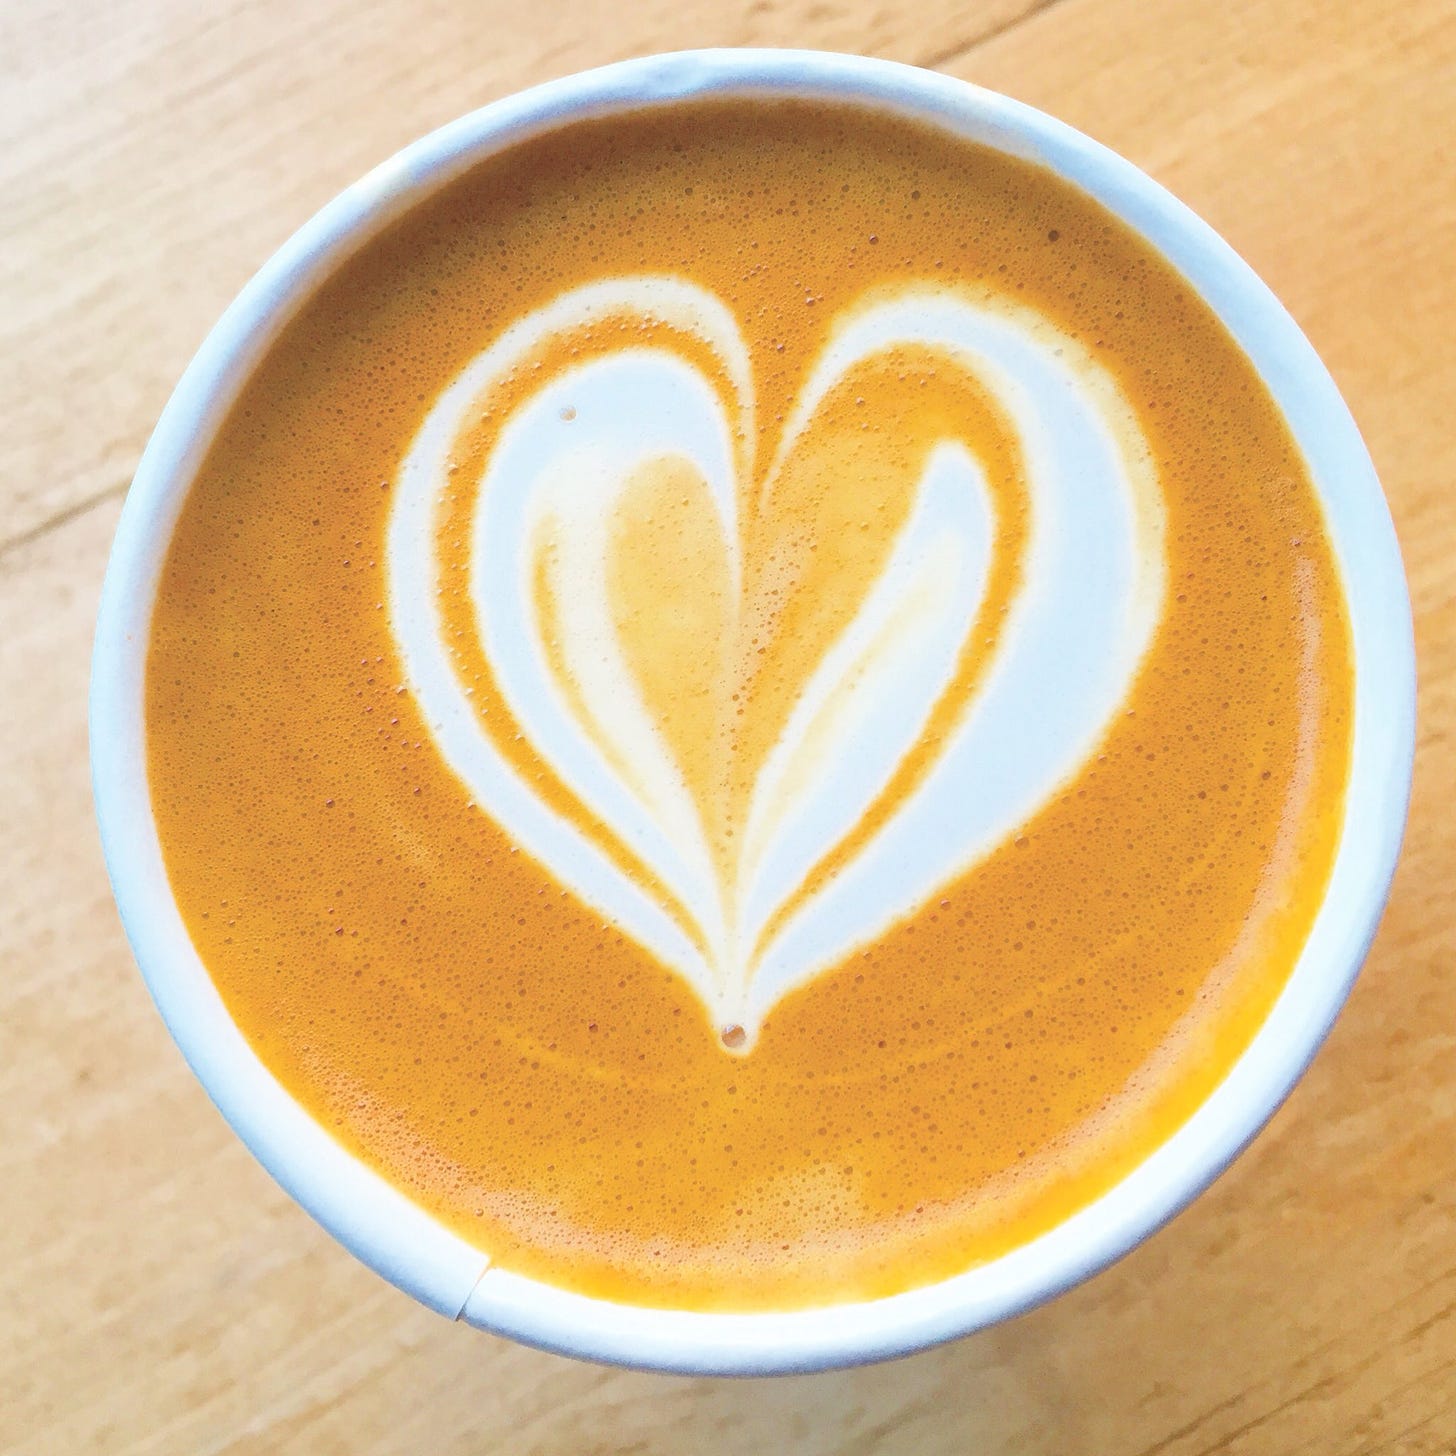 Coffee Lab UK on Twitter: "Open heart takeaway flat white! #cafe #coffee  #heart #flatwhite #winchester #hampshire #coffeelab #cafeworld #rain  https://t.co/ulLZQWtje6" / Twitter